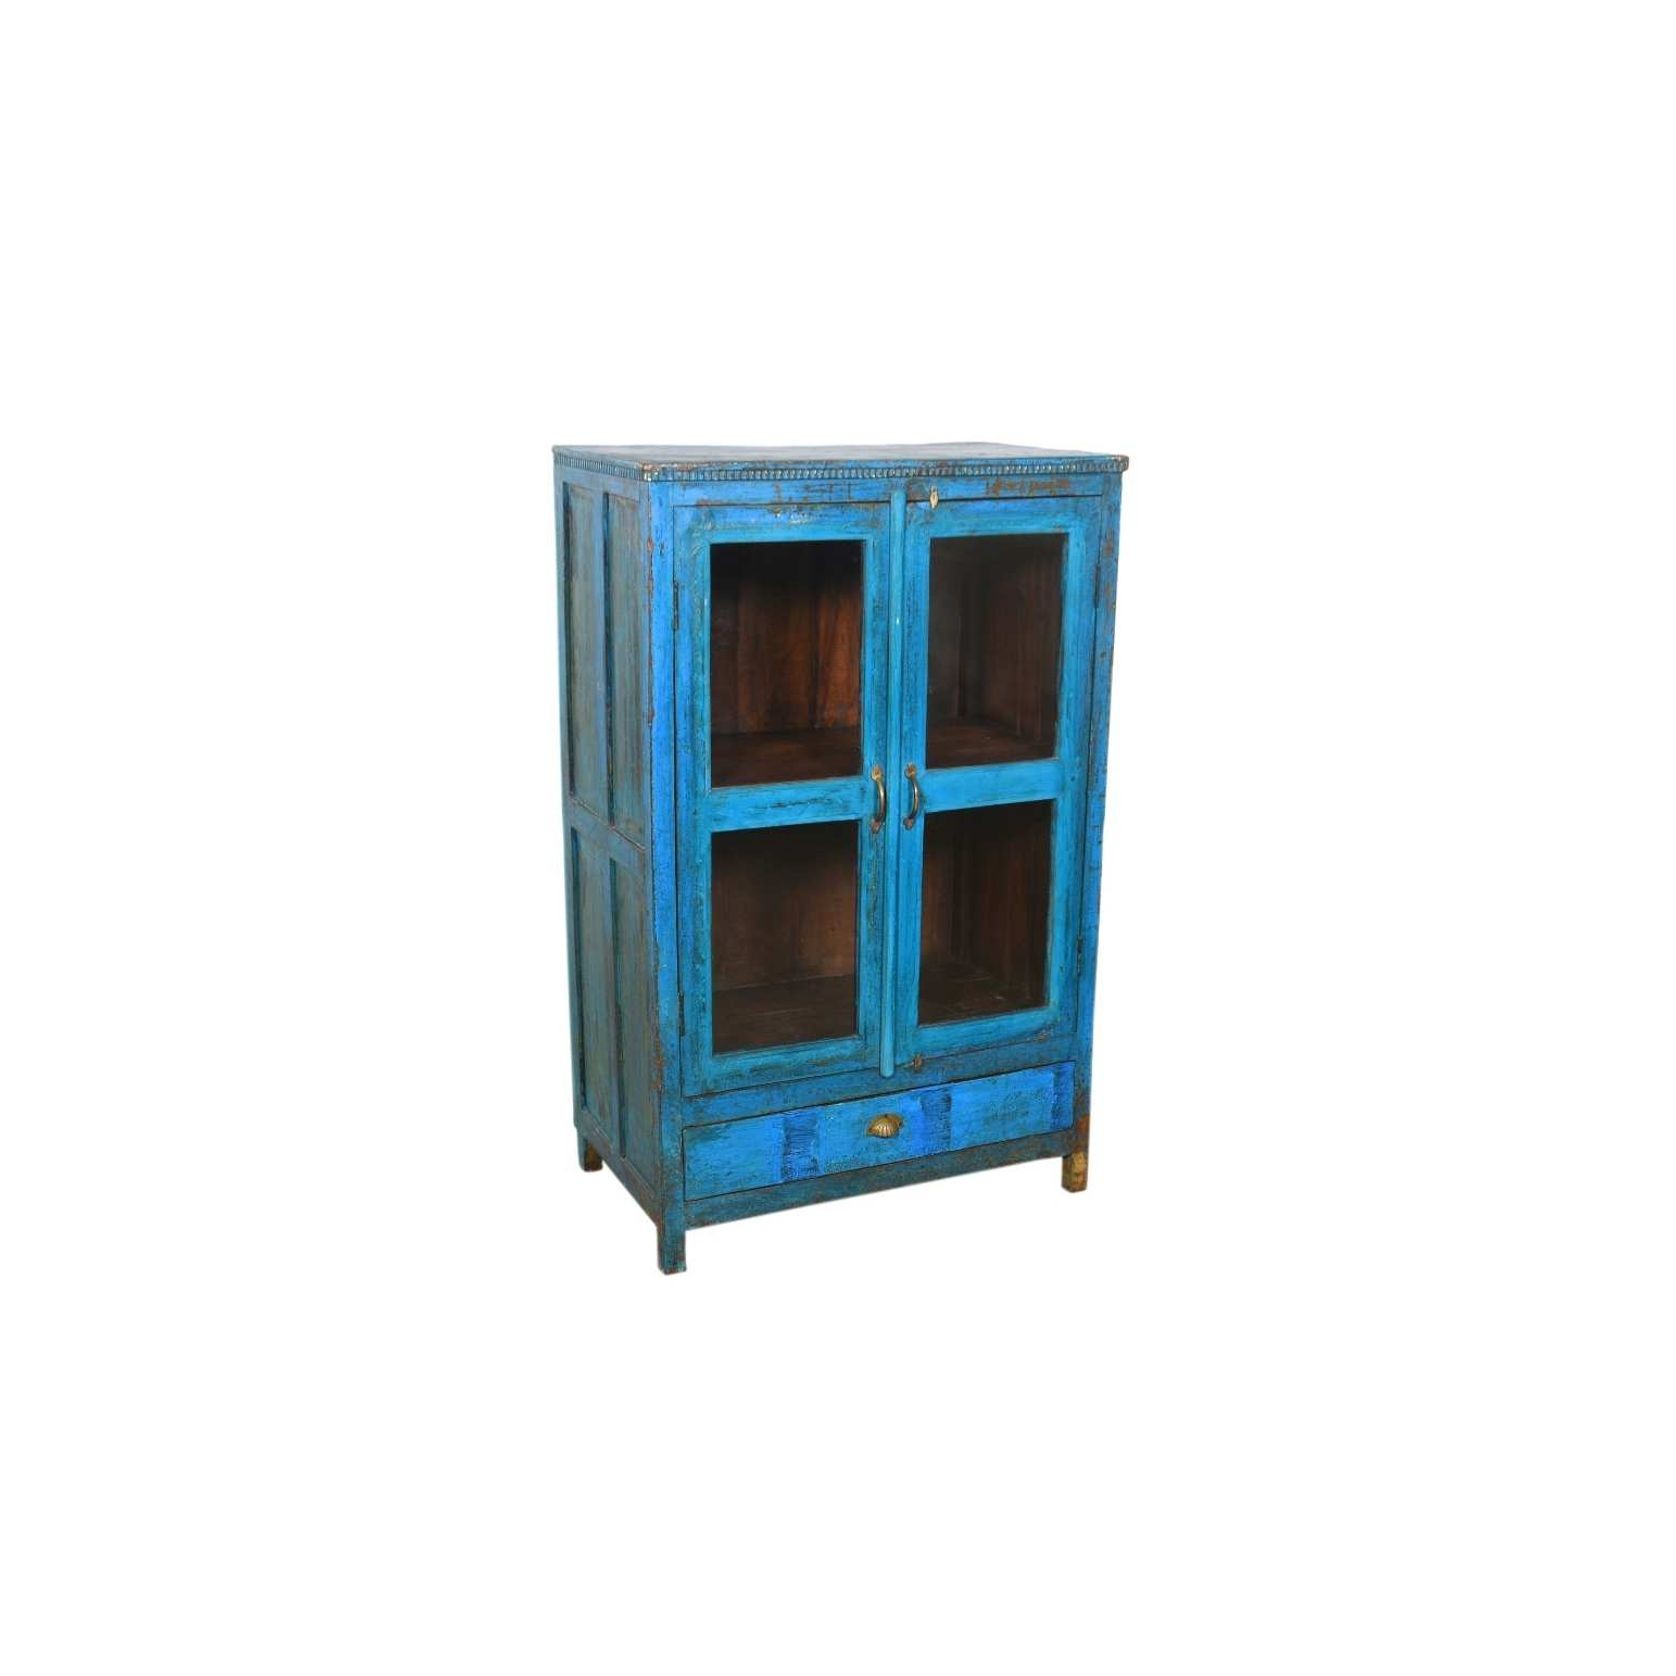 Original Wood and Glass Display Cabinet - Aqua gallery detail image